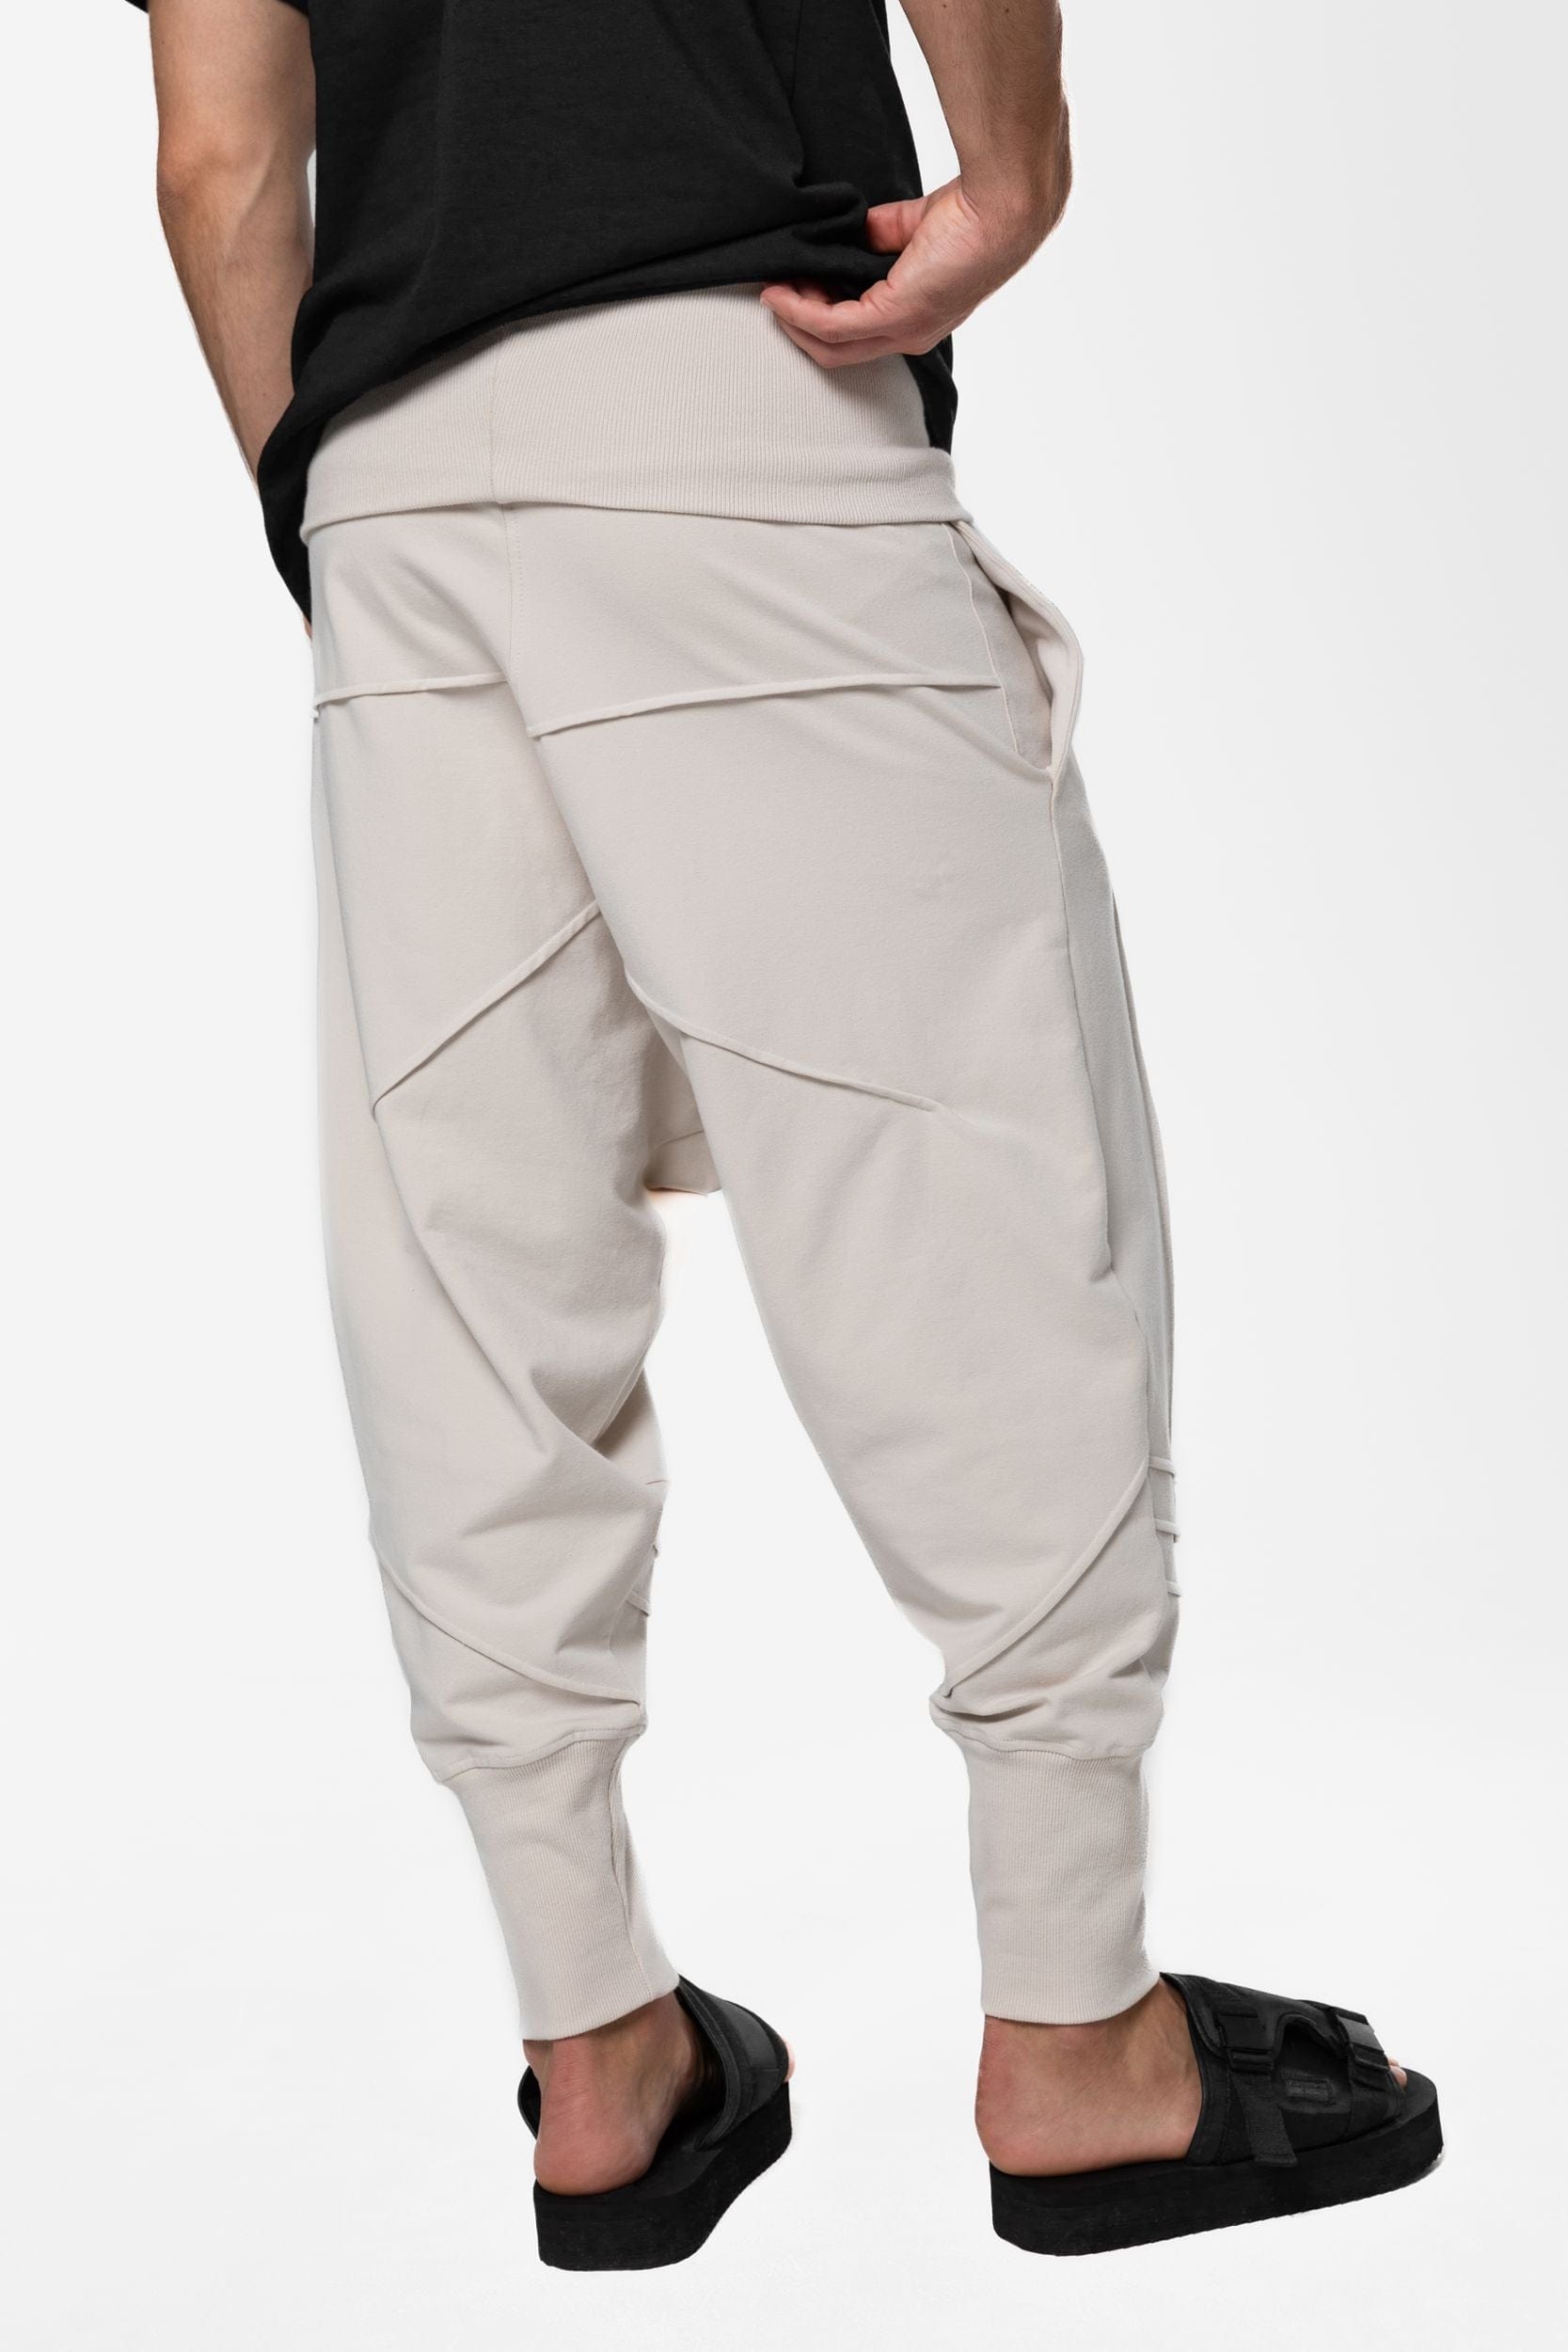 MDNT45 Harem lightweight pants